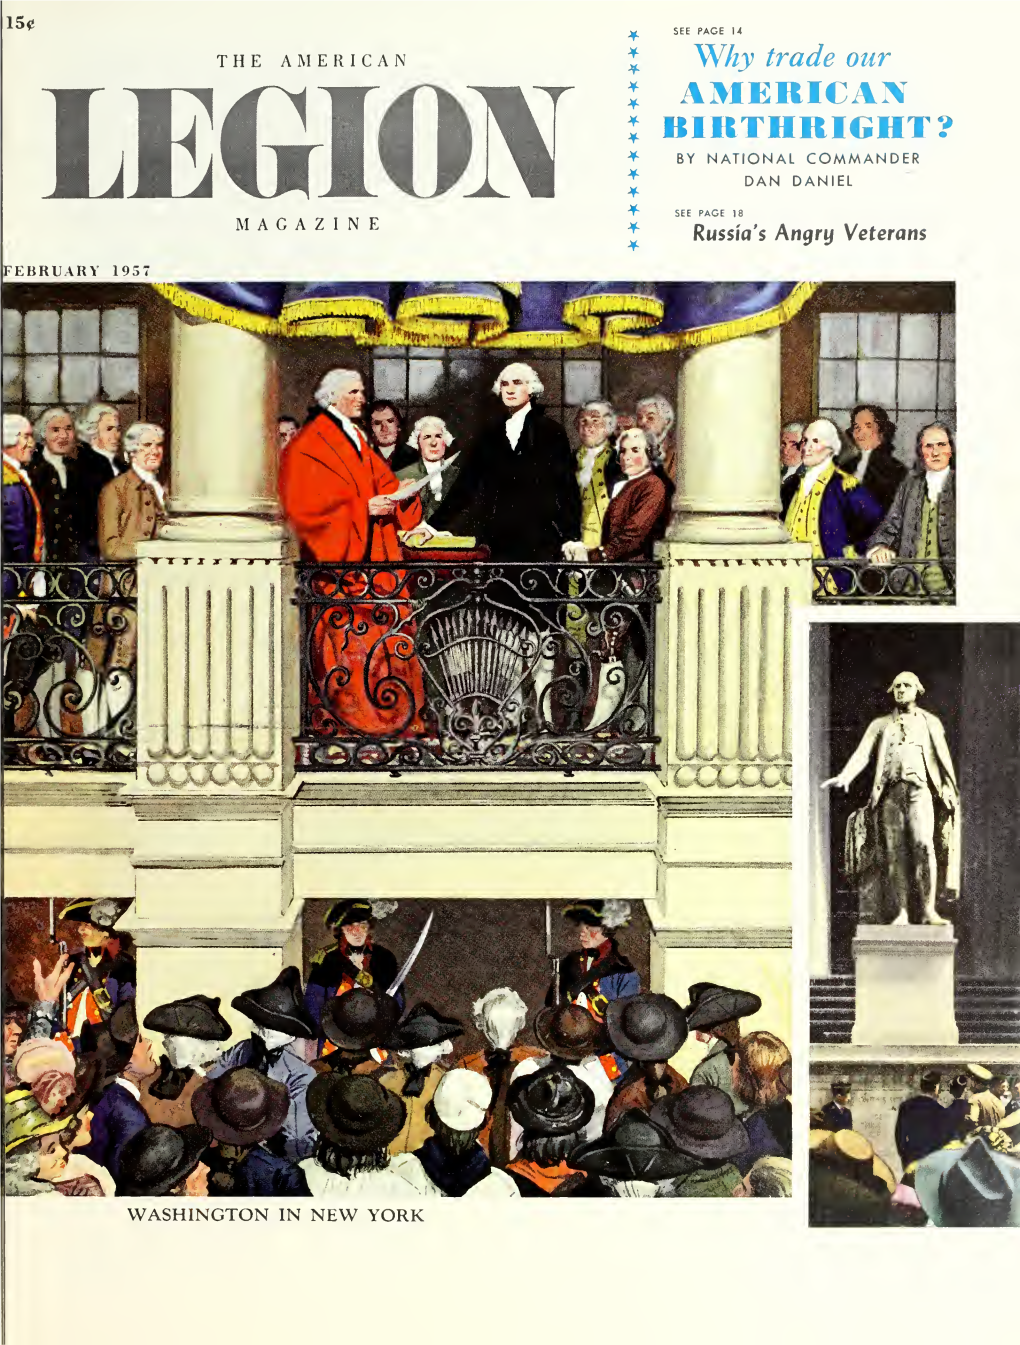 The American Legion Magazine [Volume 62, No. 2 (February 1957)]